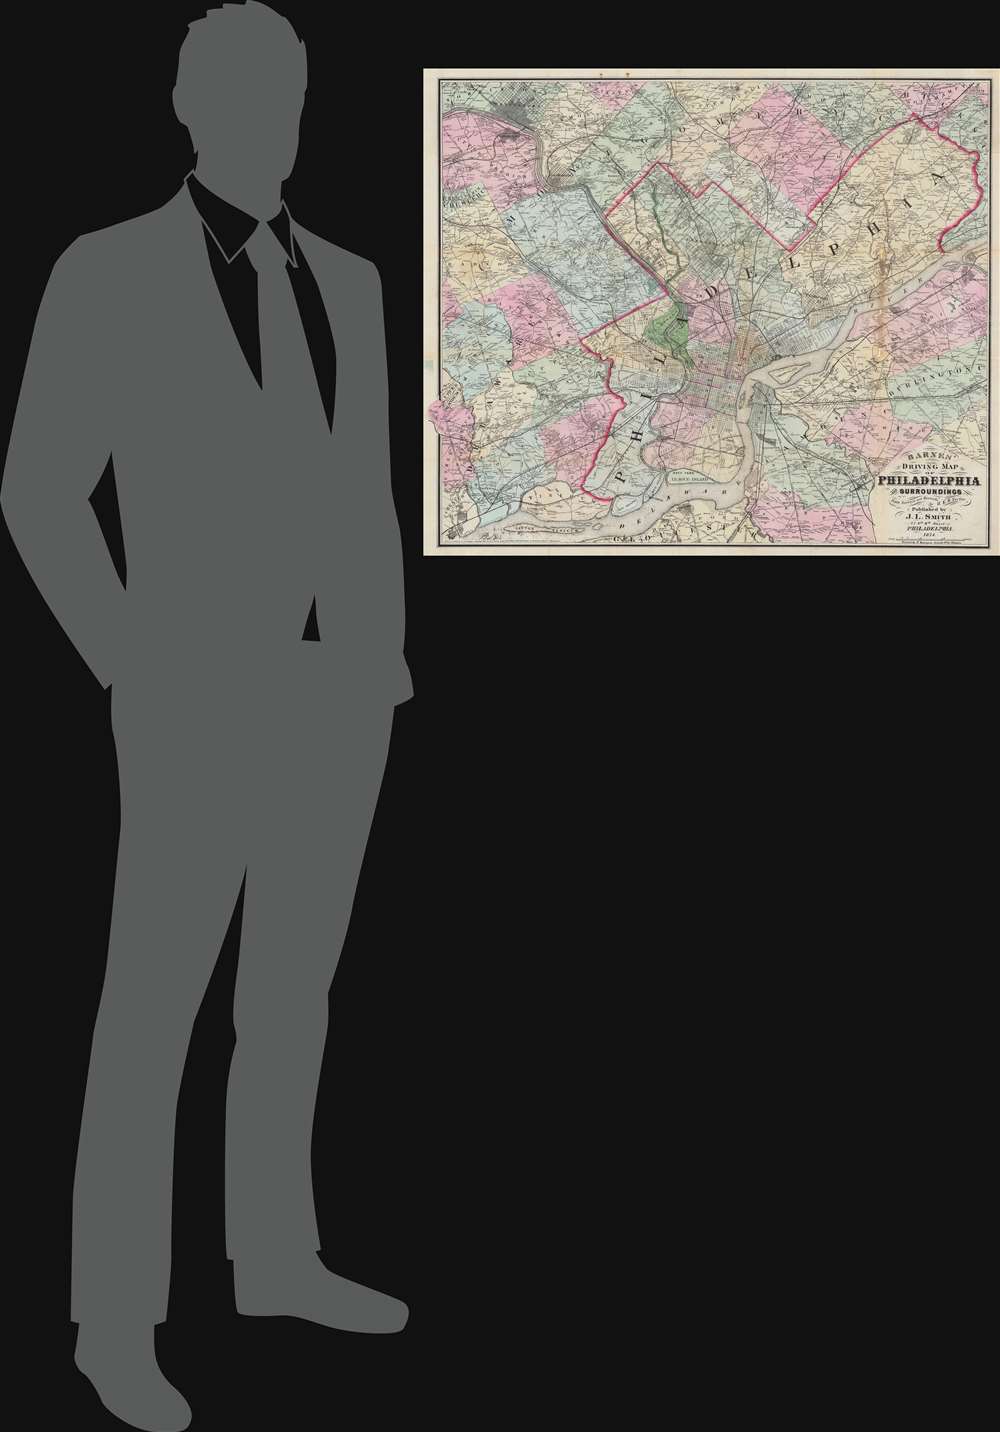 Barnes' Driving Map of Philadelphia and Surroundings. - Alternate View 1